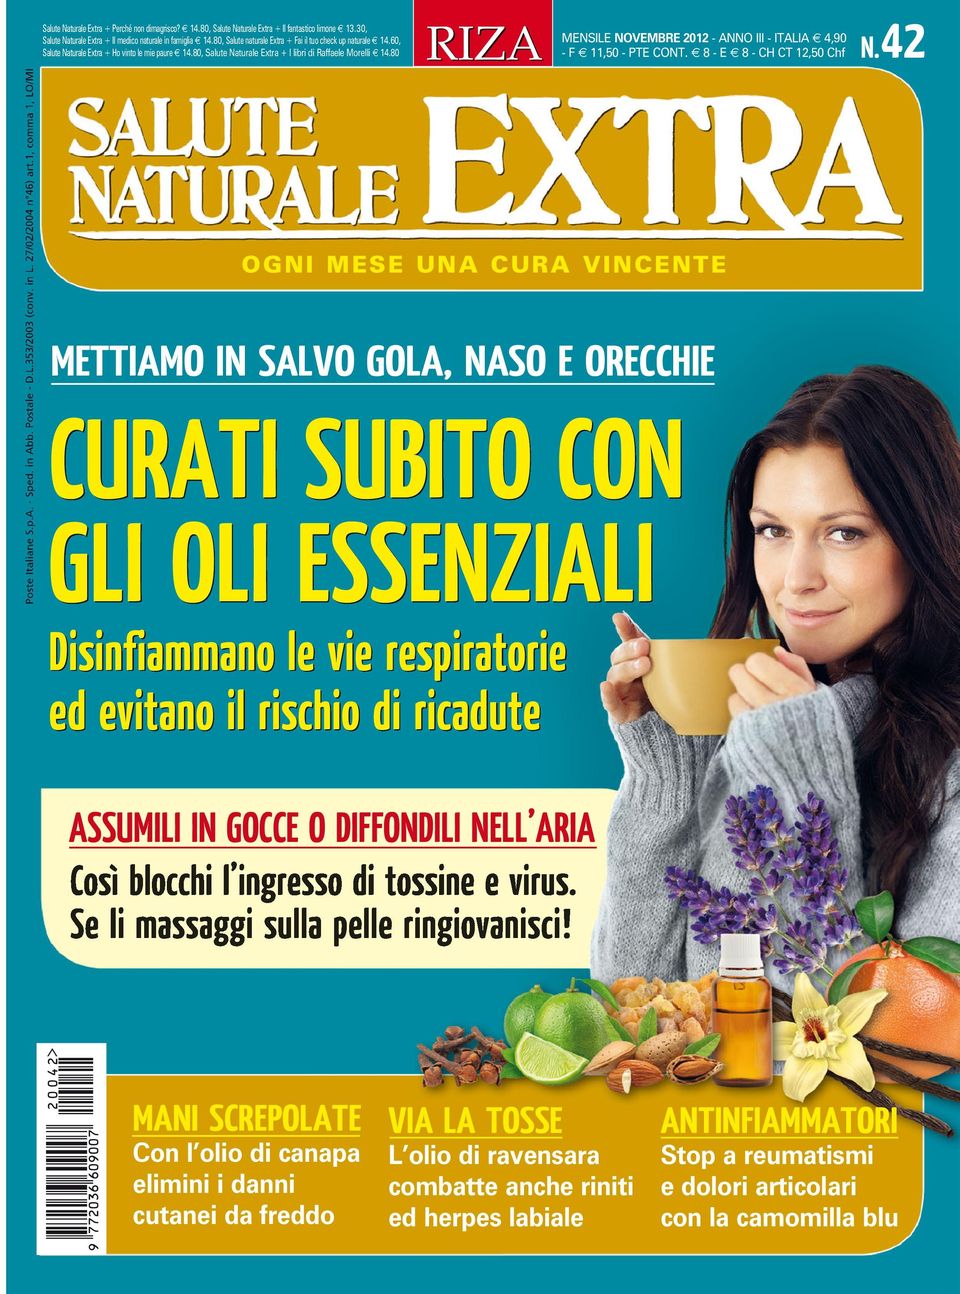 60, Salute Naturale Extra + Ho vinto le mie paure 14.80, Salute Naturale Extra + I libri di Raffaele Morelli 14.